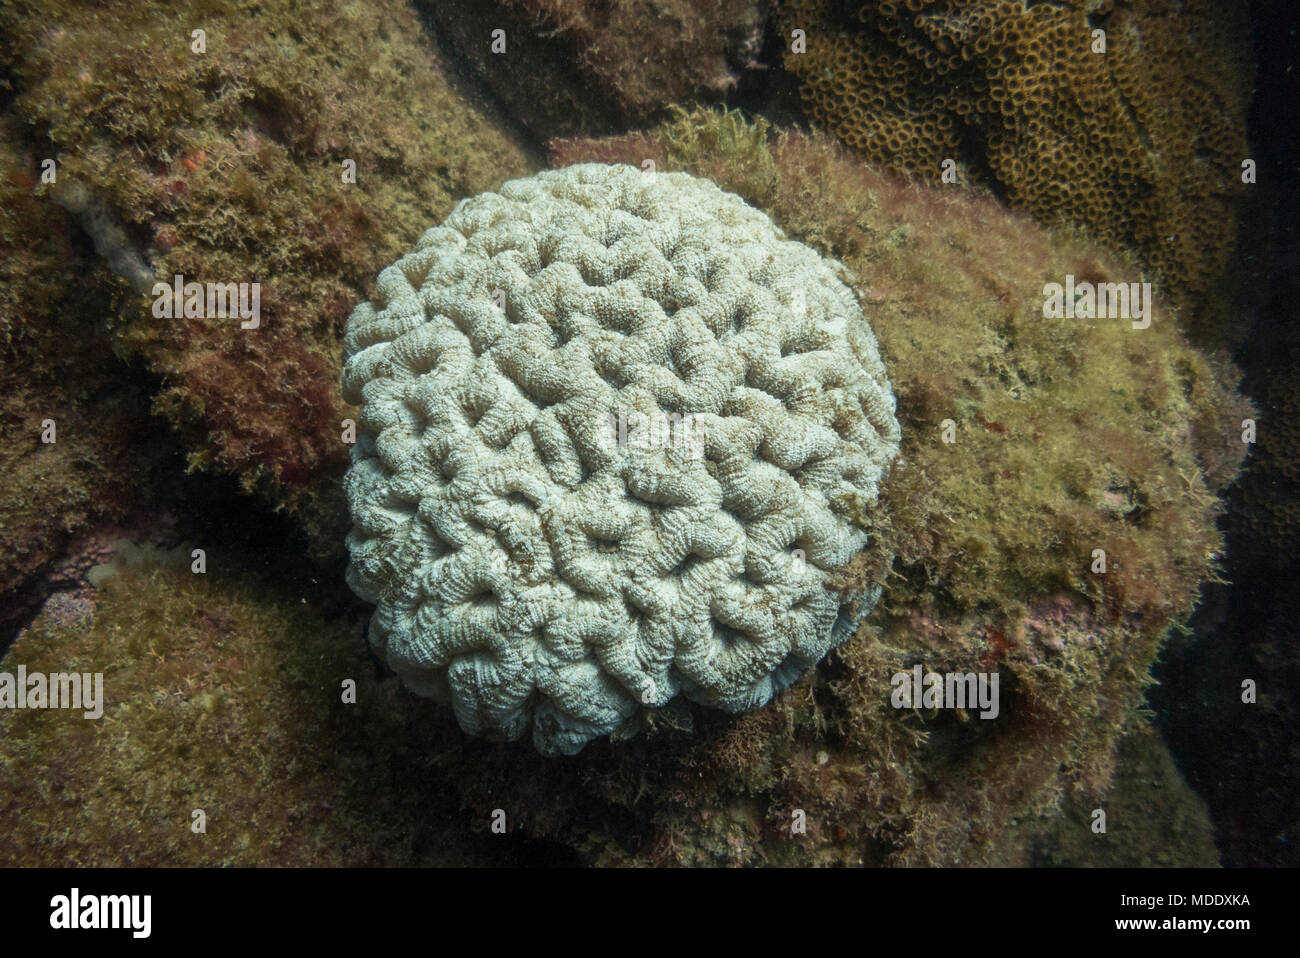 Brain Coral from Ilhabela, SE Brazil Stock Photo